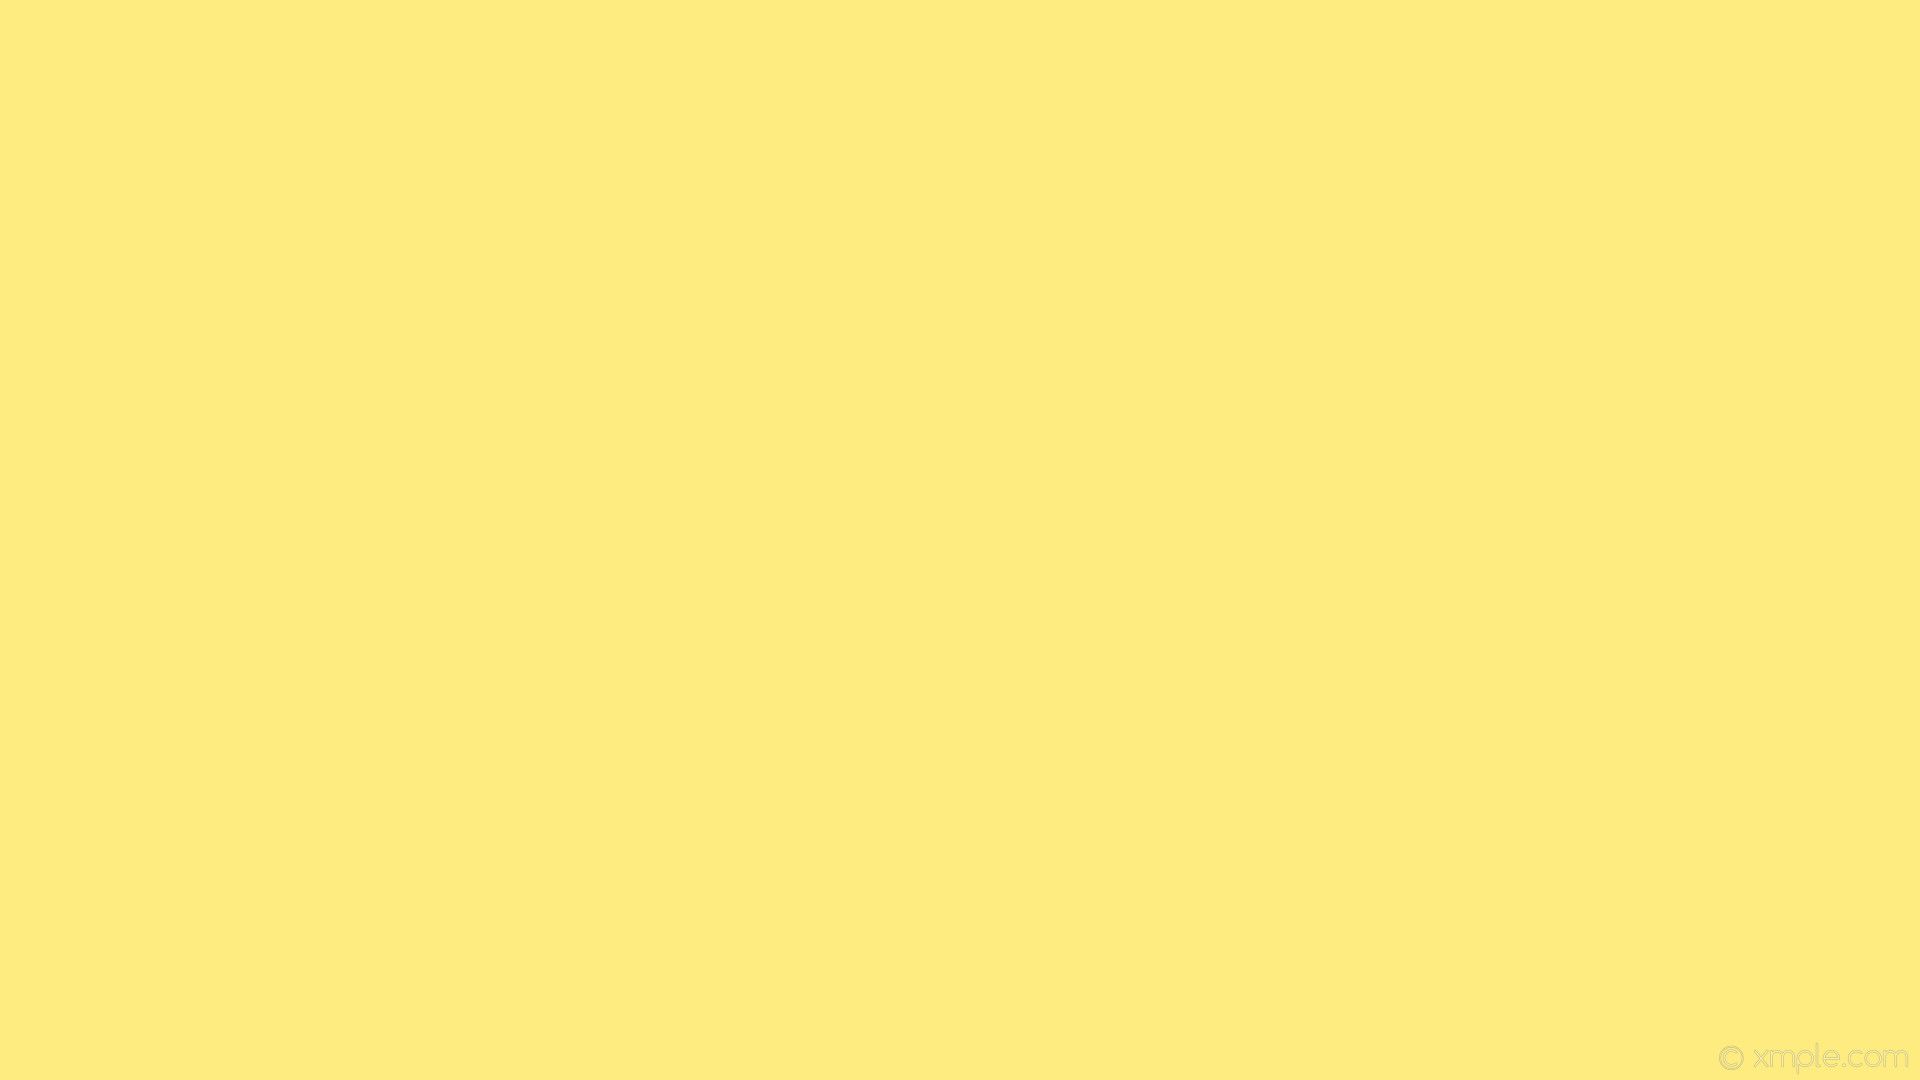 iMac 2021 Wallpaper 4K, Yellow background